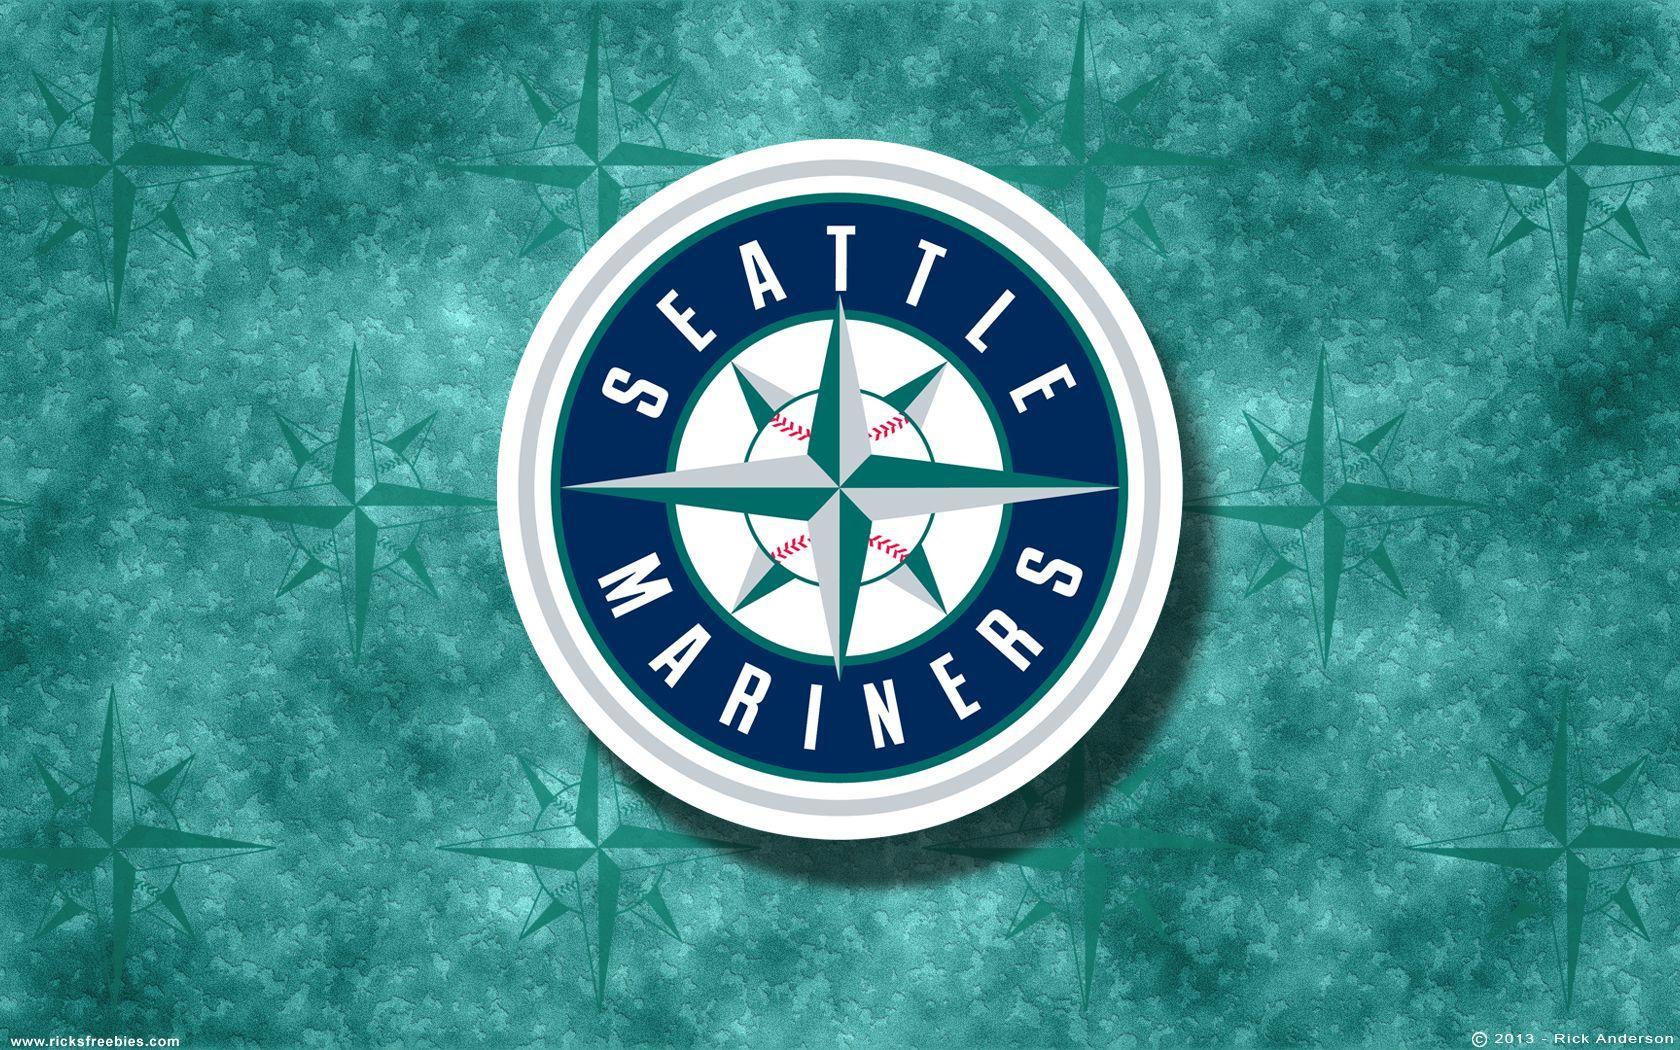 Seattle Mariners iPhone Wallpaper